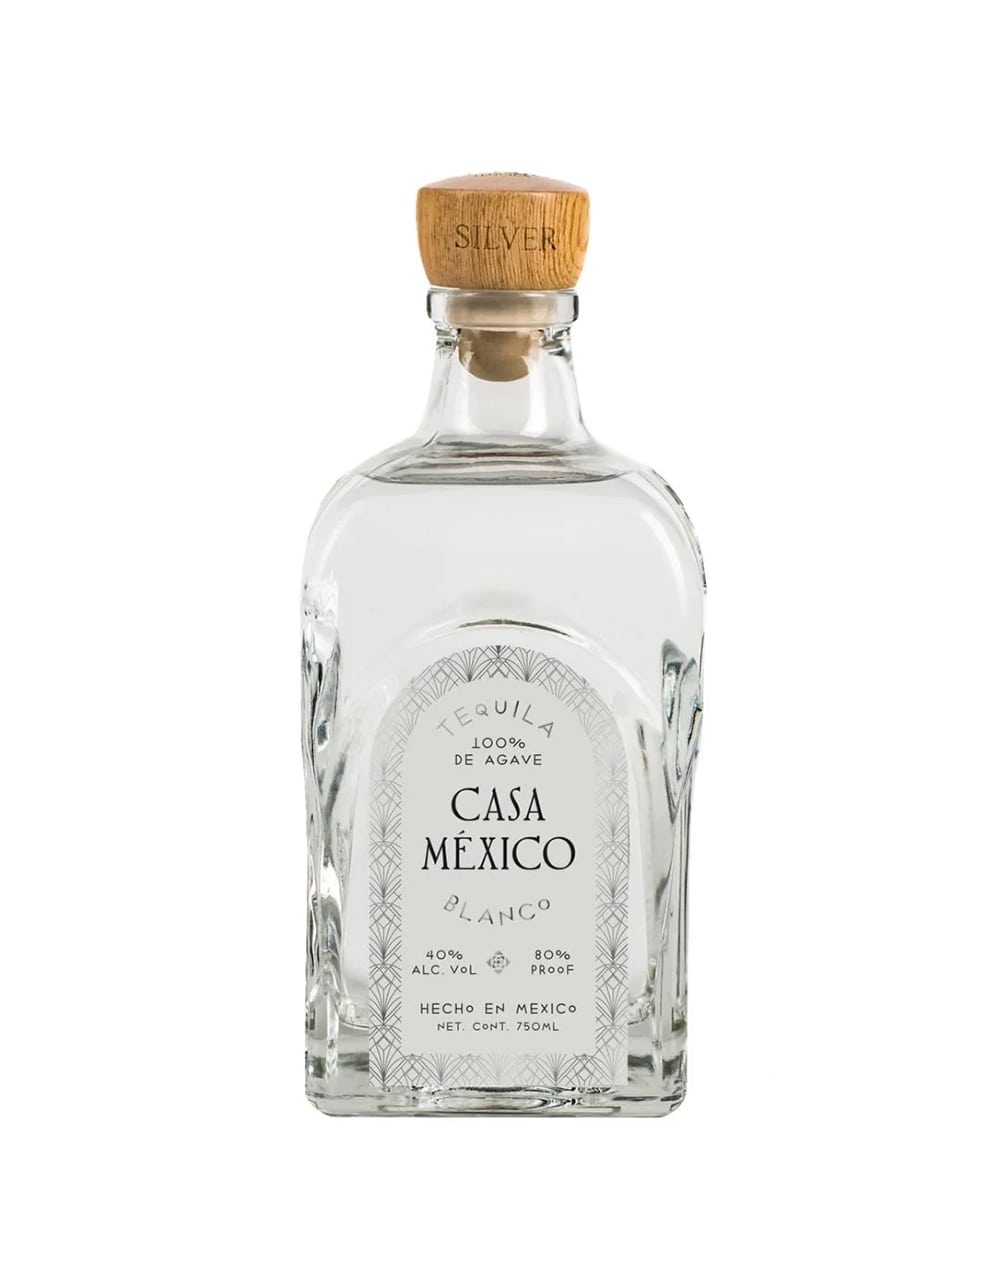 Casa Mexico Silver Tequila